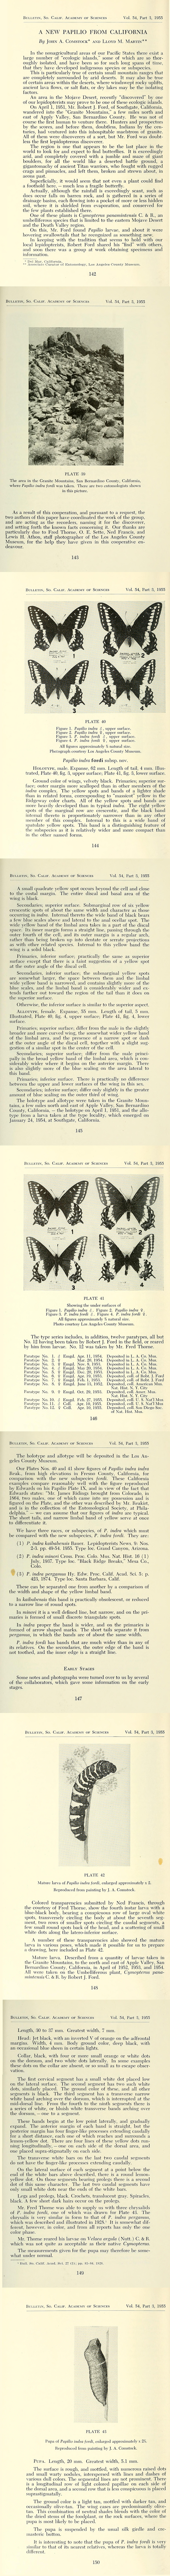 Paper on the true type locality of Papilio indra pergamus